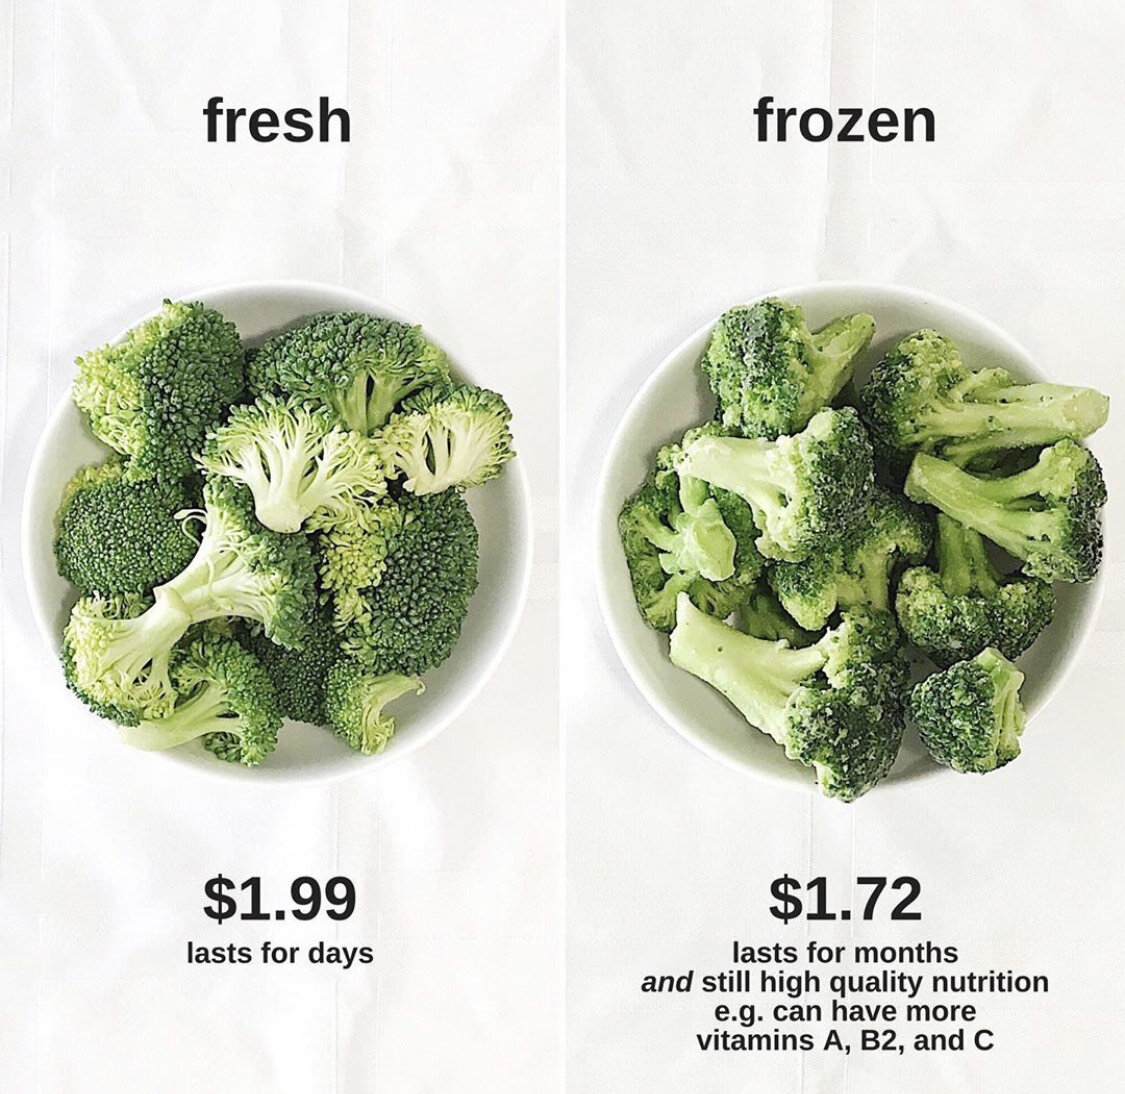 Fresh vs. Frozen Veg - which is better?